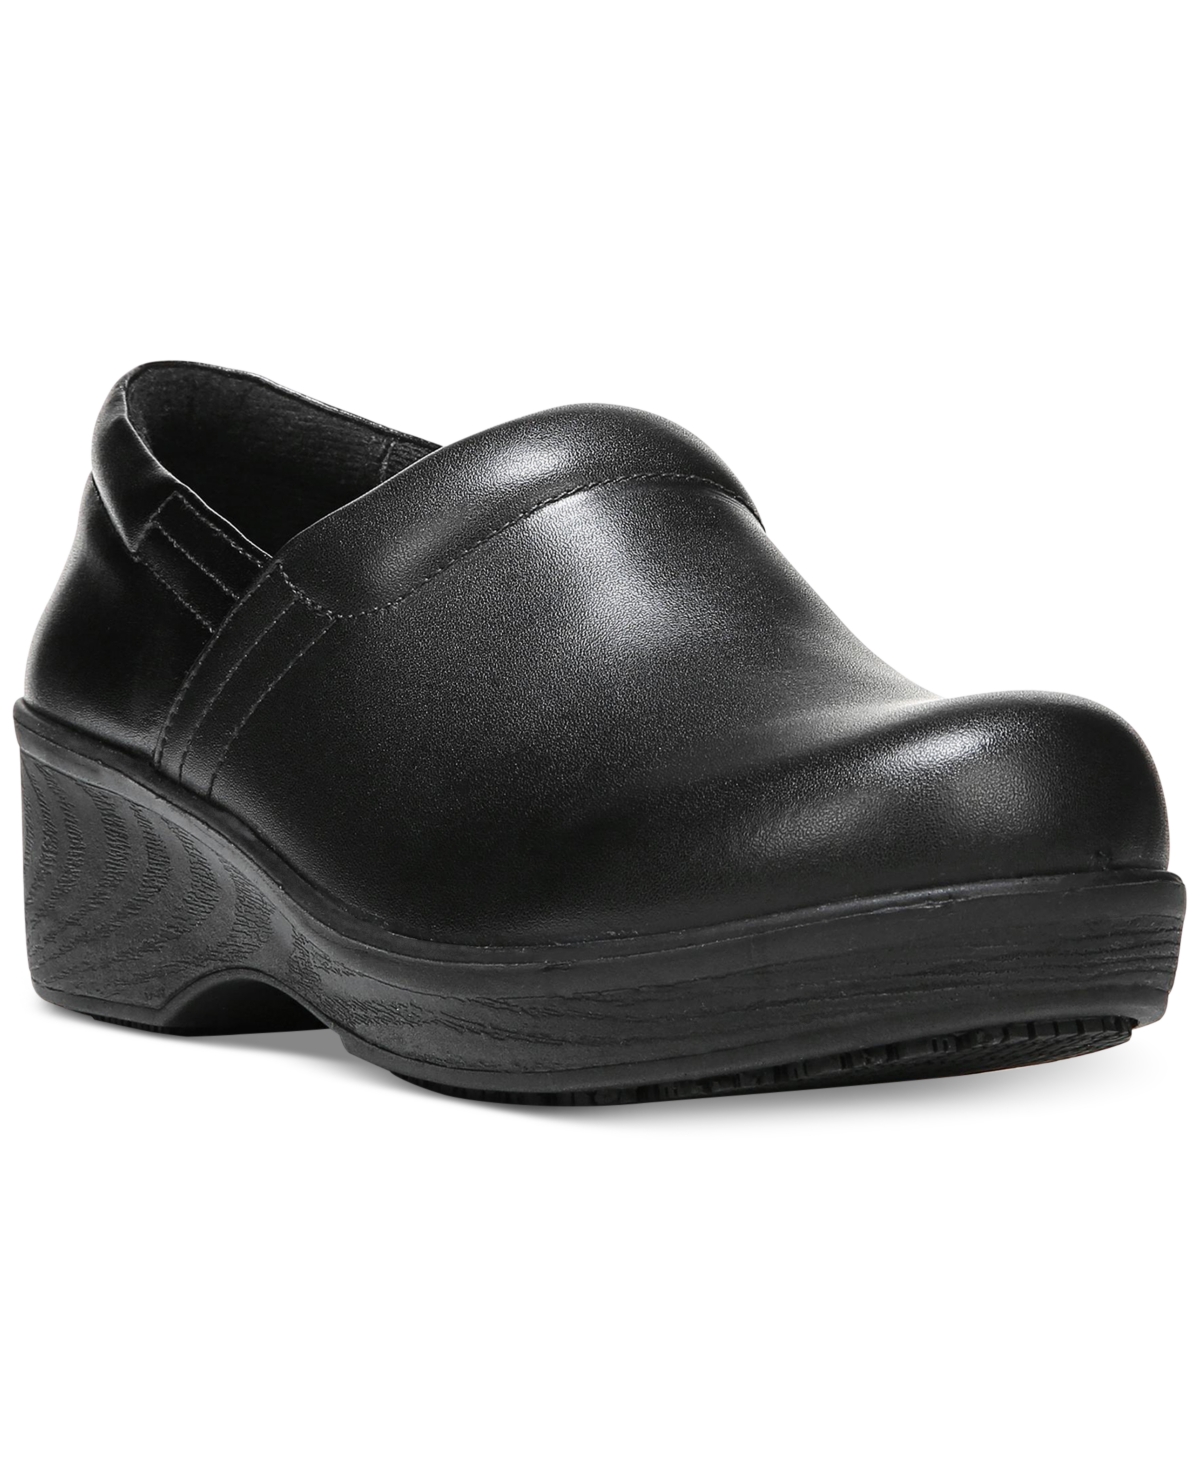 Women's Dynamo Slip-Resistant Work Clogs - Black Leather